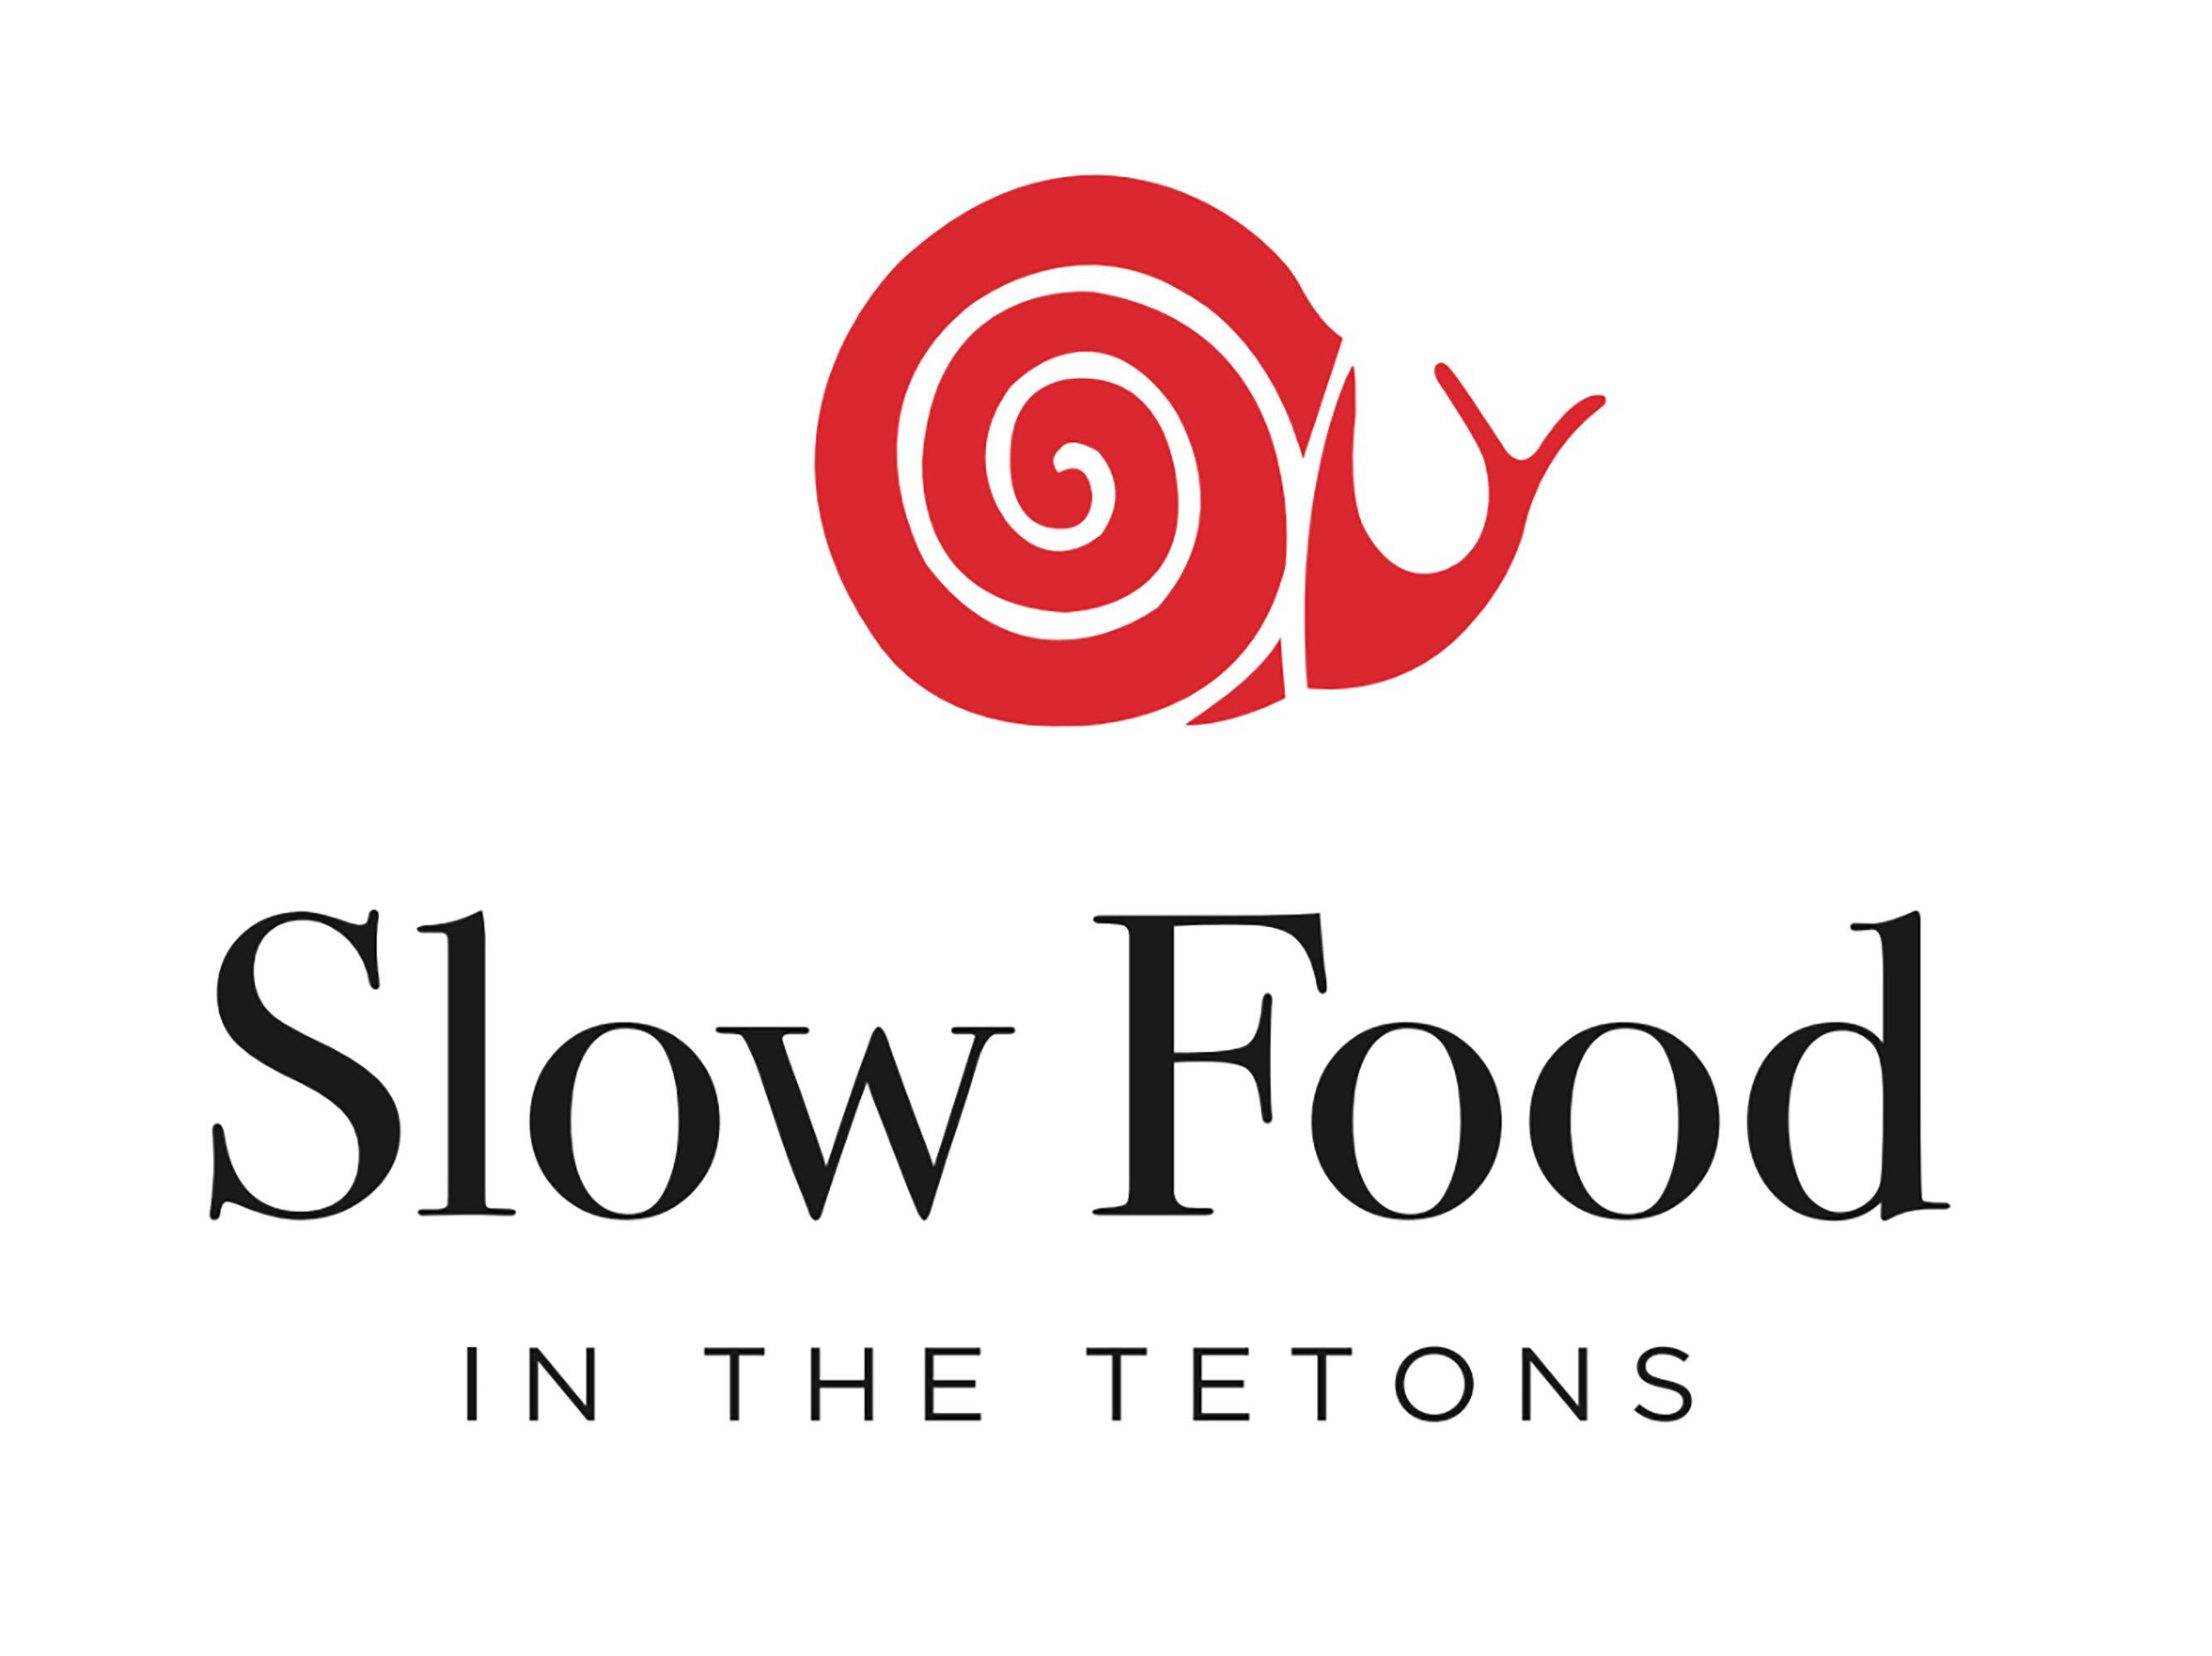 Slow Logo - Slow Food Logo Clear Creek Group Real Estate